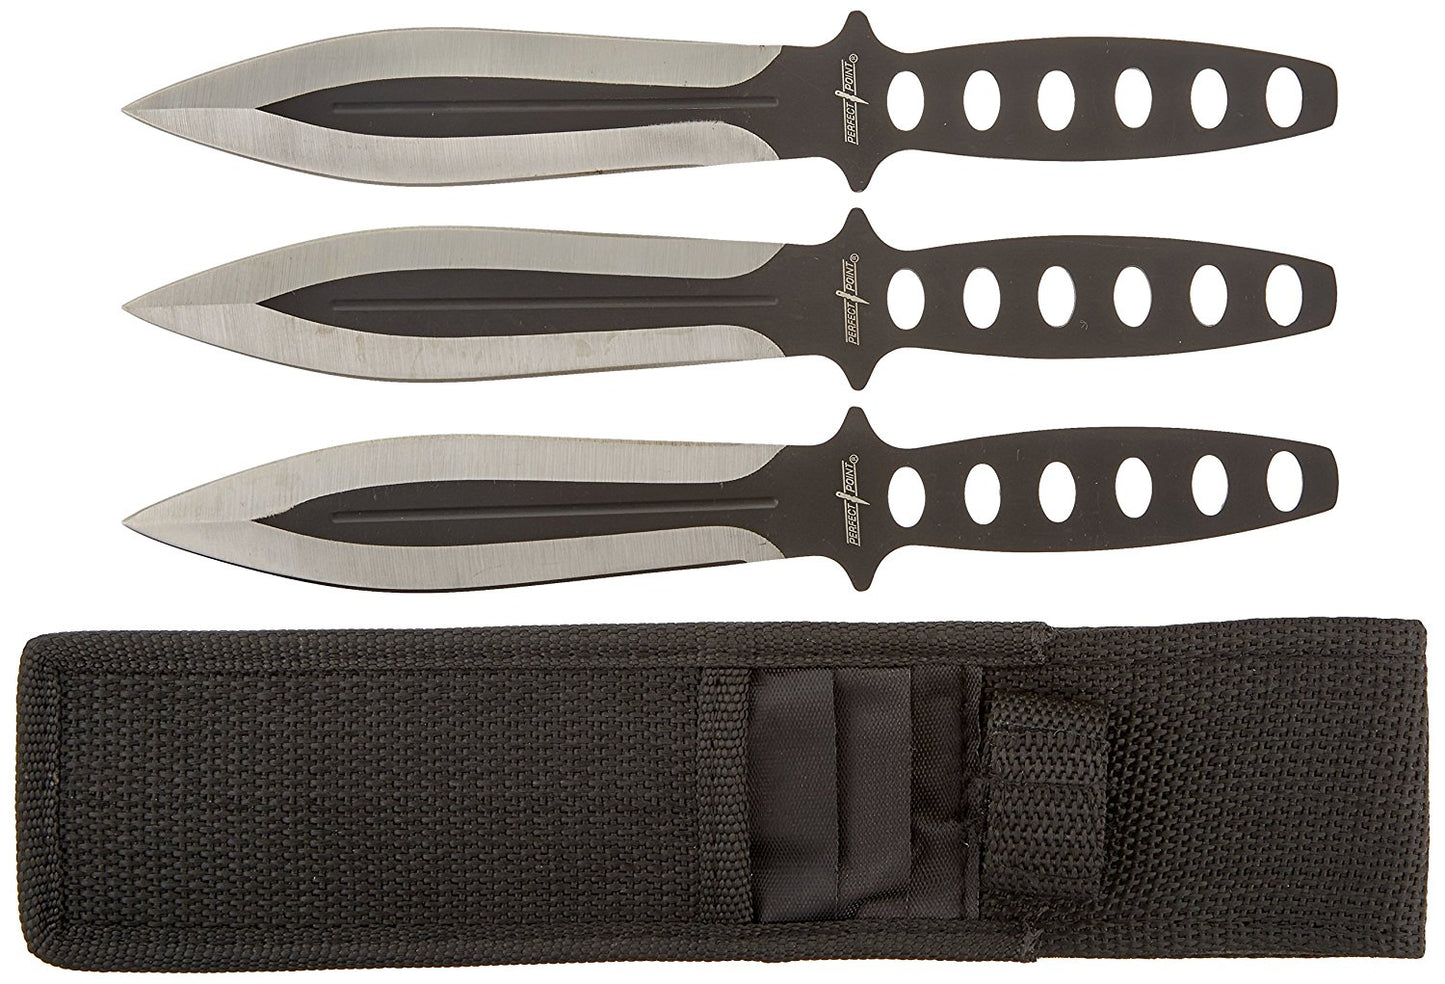 BladesUSA RC-136-3 Throwing Knife Set 8-Inch Overall